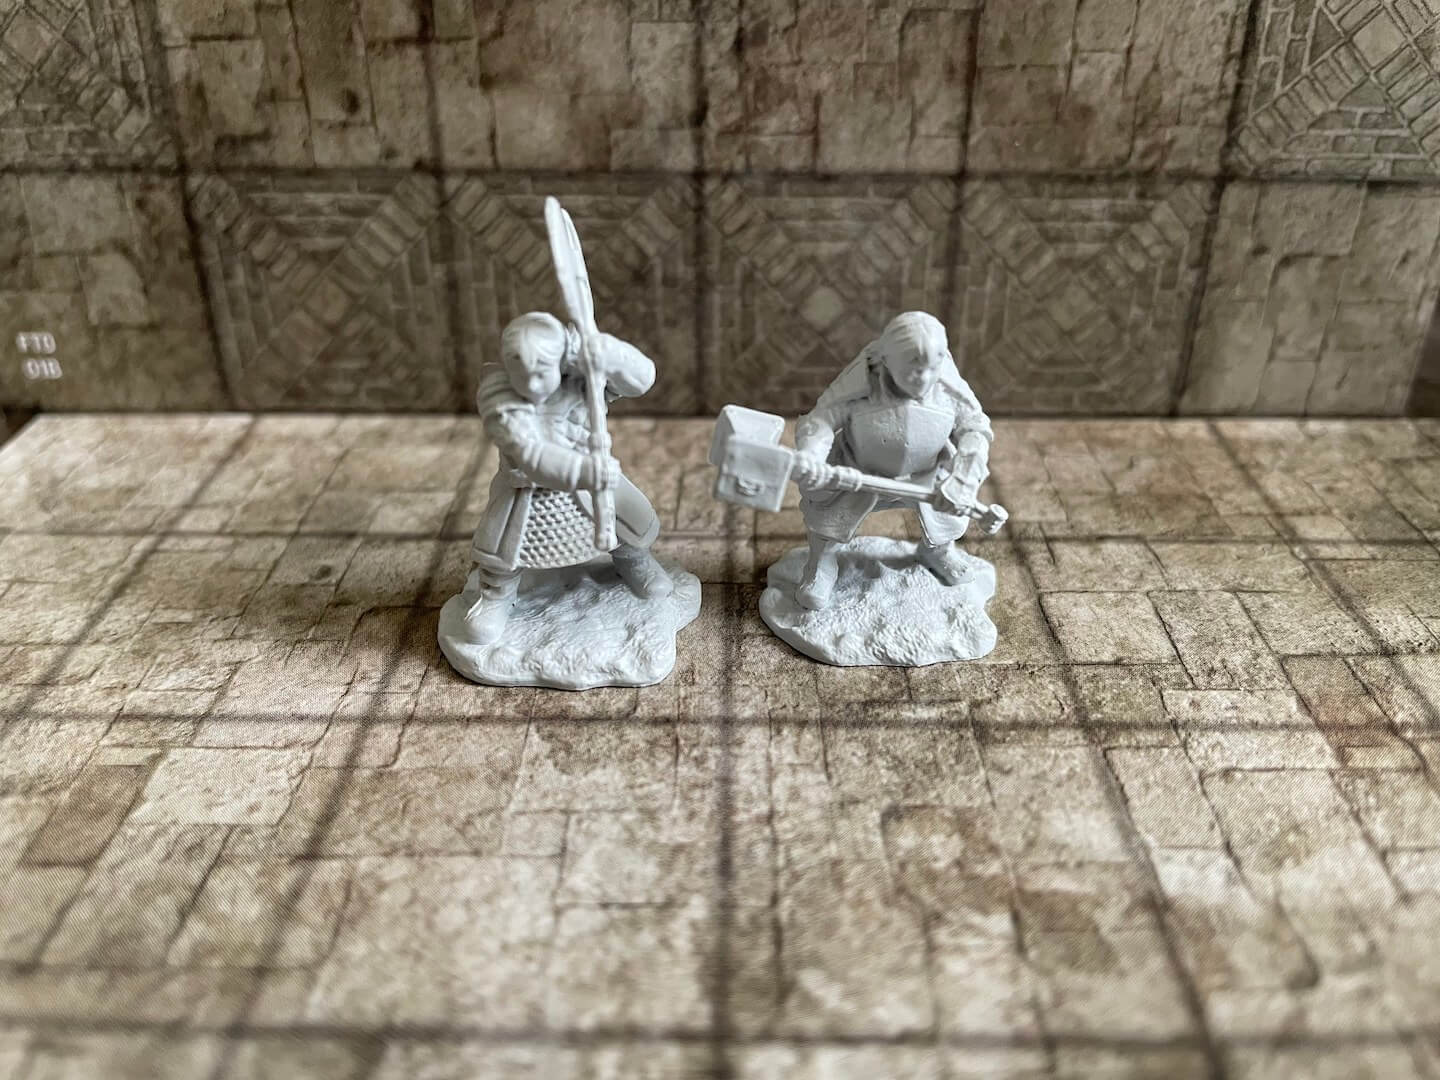  Wizkids Critical Role Miniatures Dwarf Dwendalian Empire Fighters